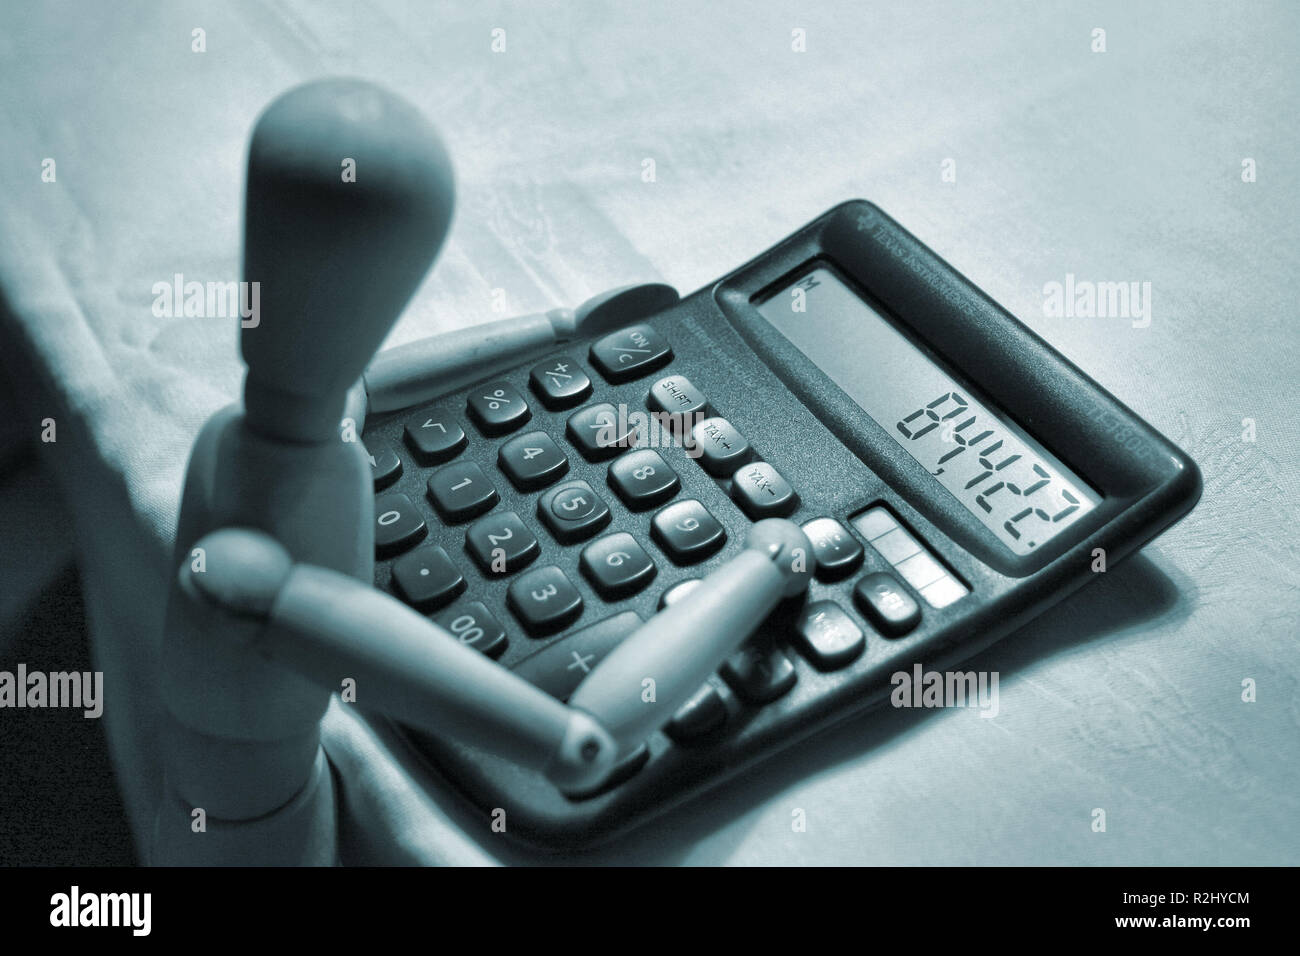 the cool calculators 1 Stock Photo